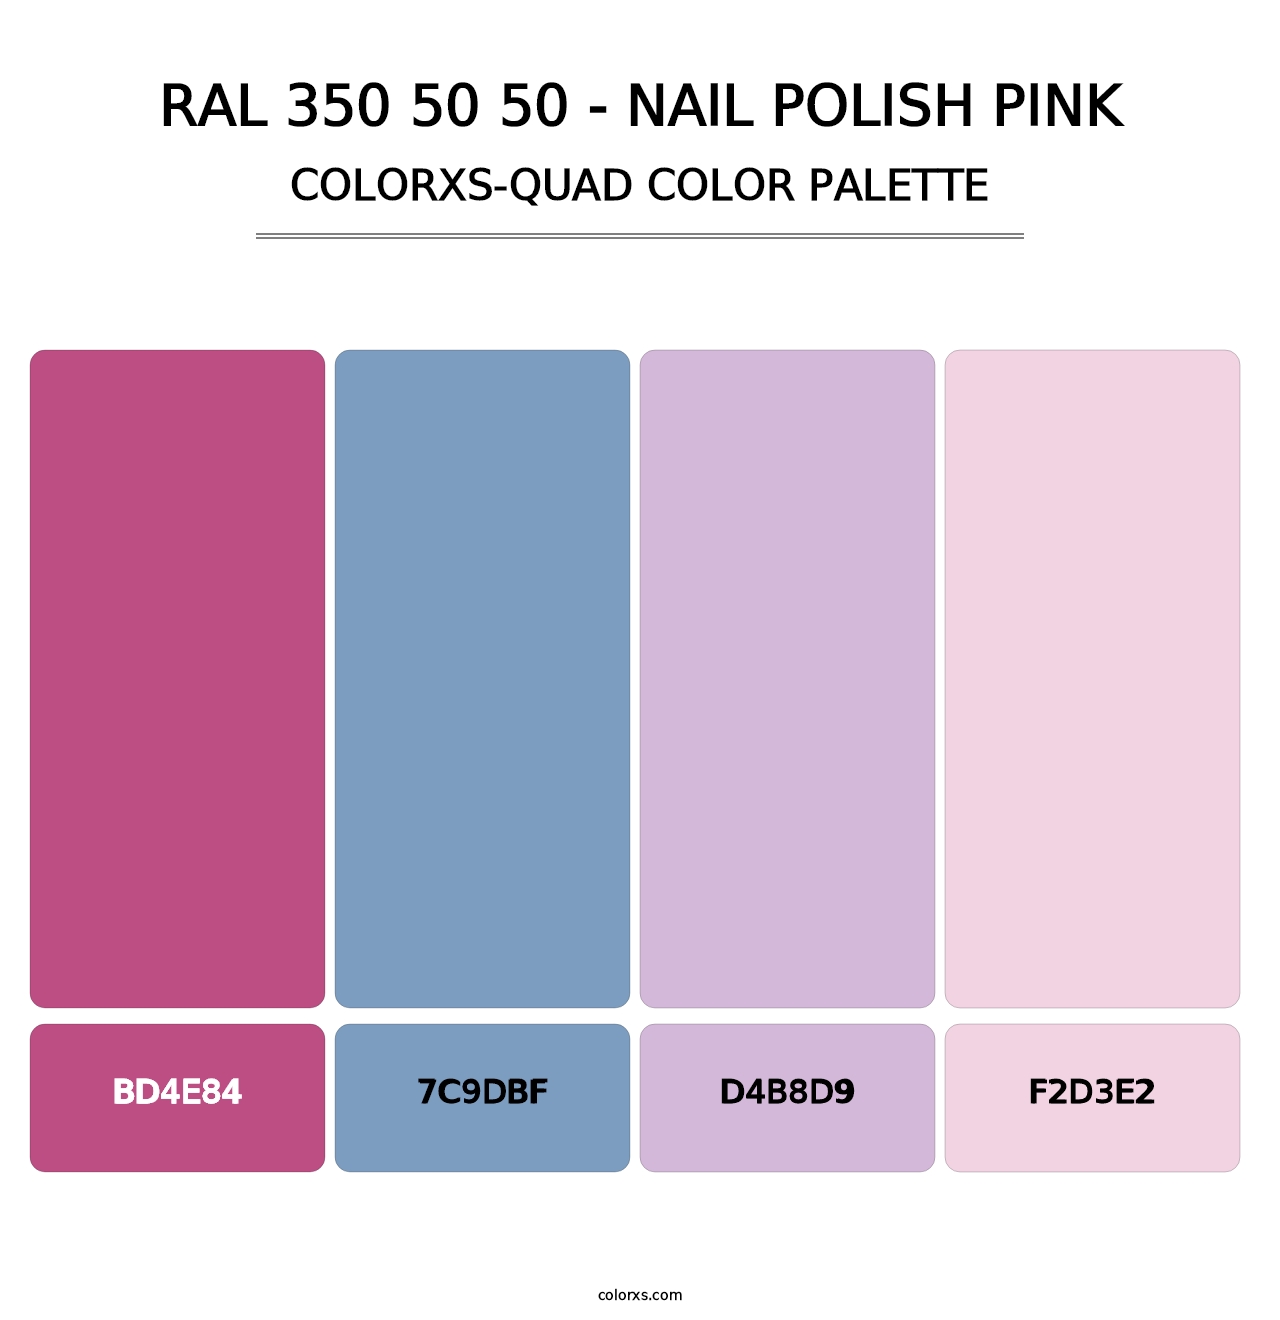 RAL 350 50 50 - Nail Polish Pink - Colorxs Quad Palette